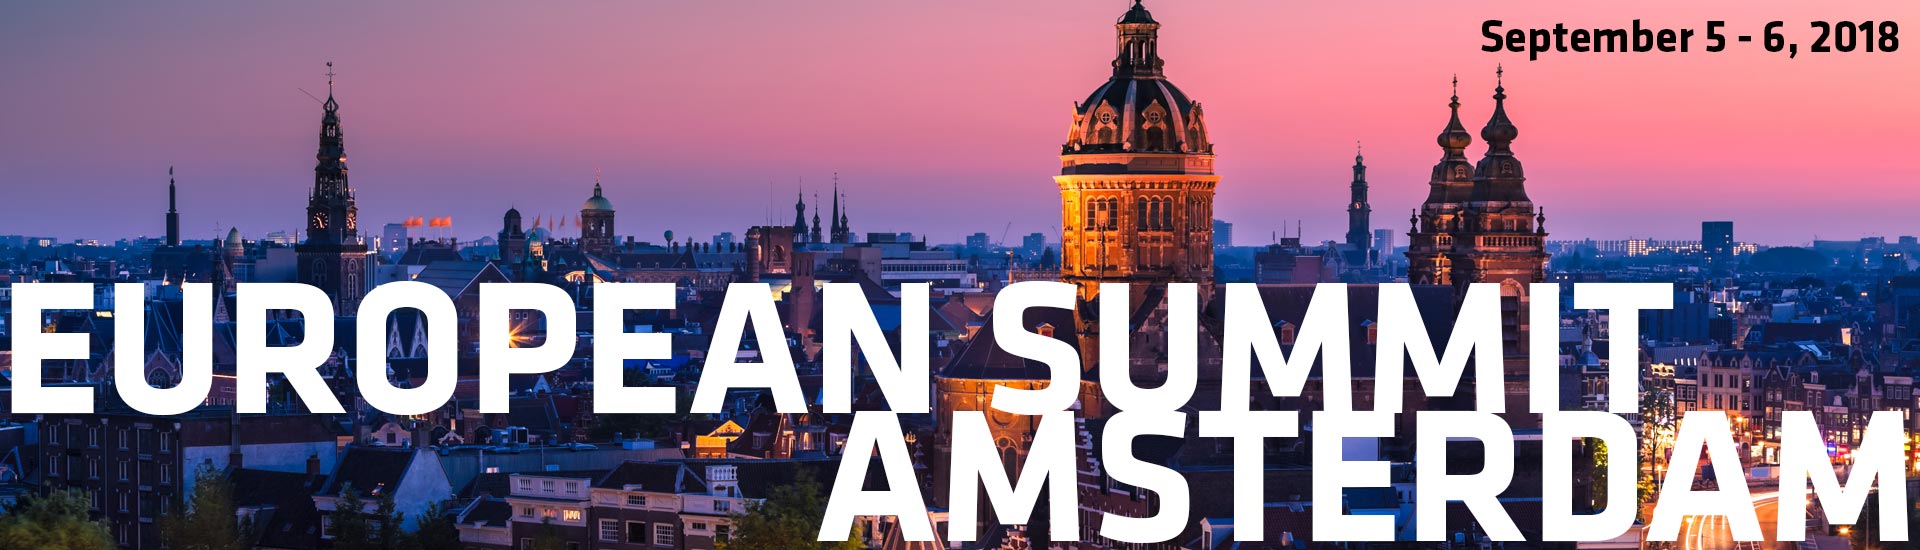 European Summit • Amsterdam, Netherlands • September 5-6